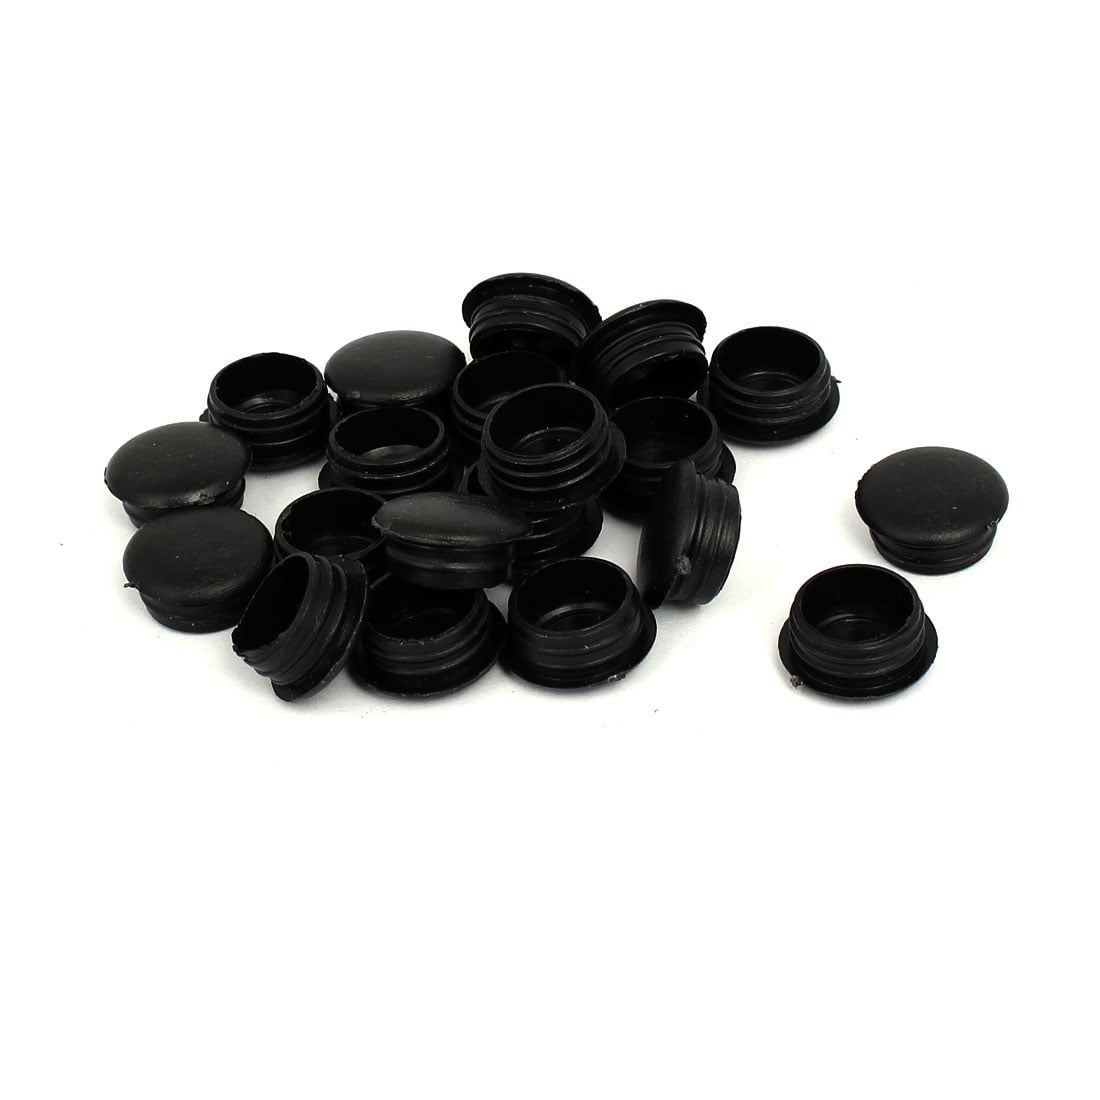 15mm Dia Plastic Thread Design Screw Cap Covers Hole Lids Black 20pcs 